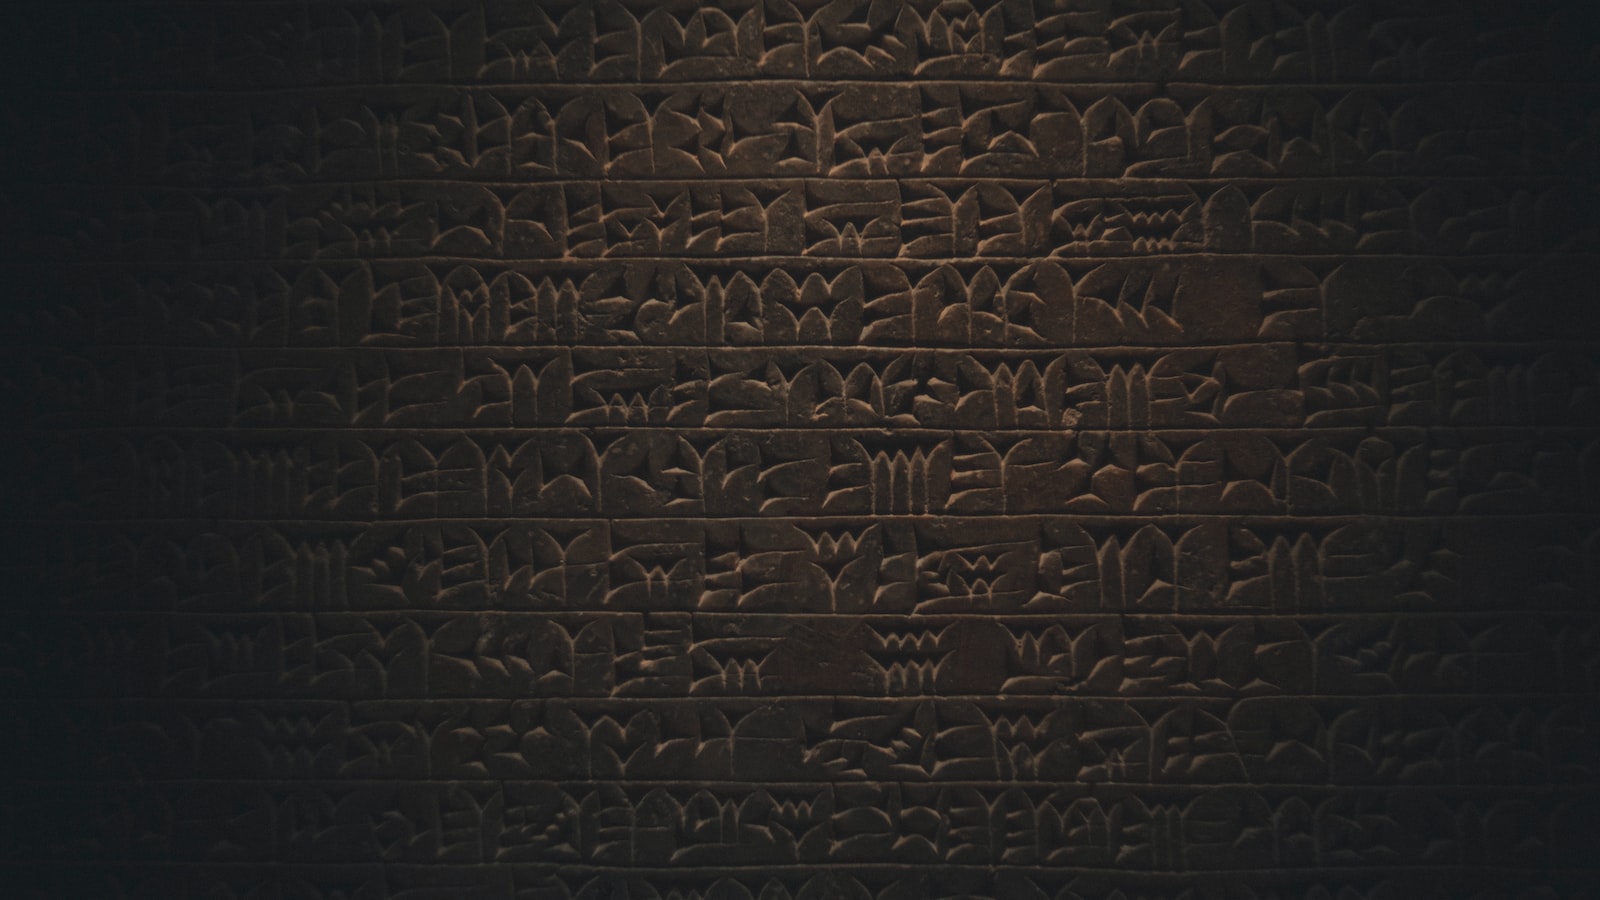 3. Uncovering the Enigma of Mesopotamia: Sumerians, Cuneiform Writing, and the Code of Hammurabi